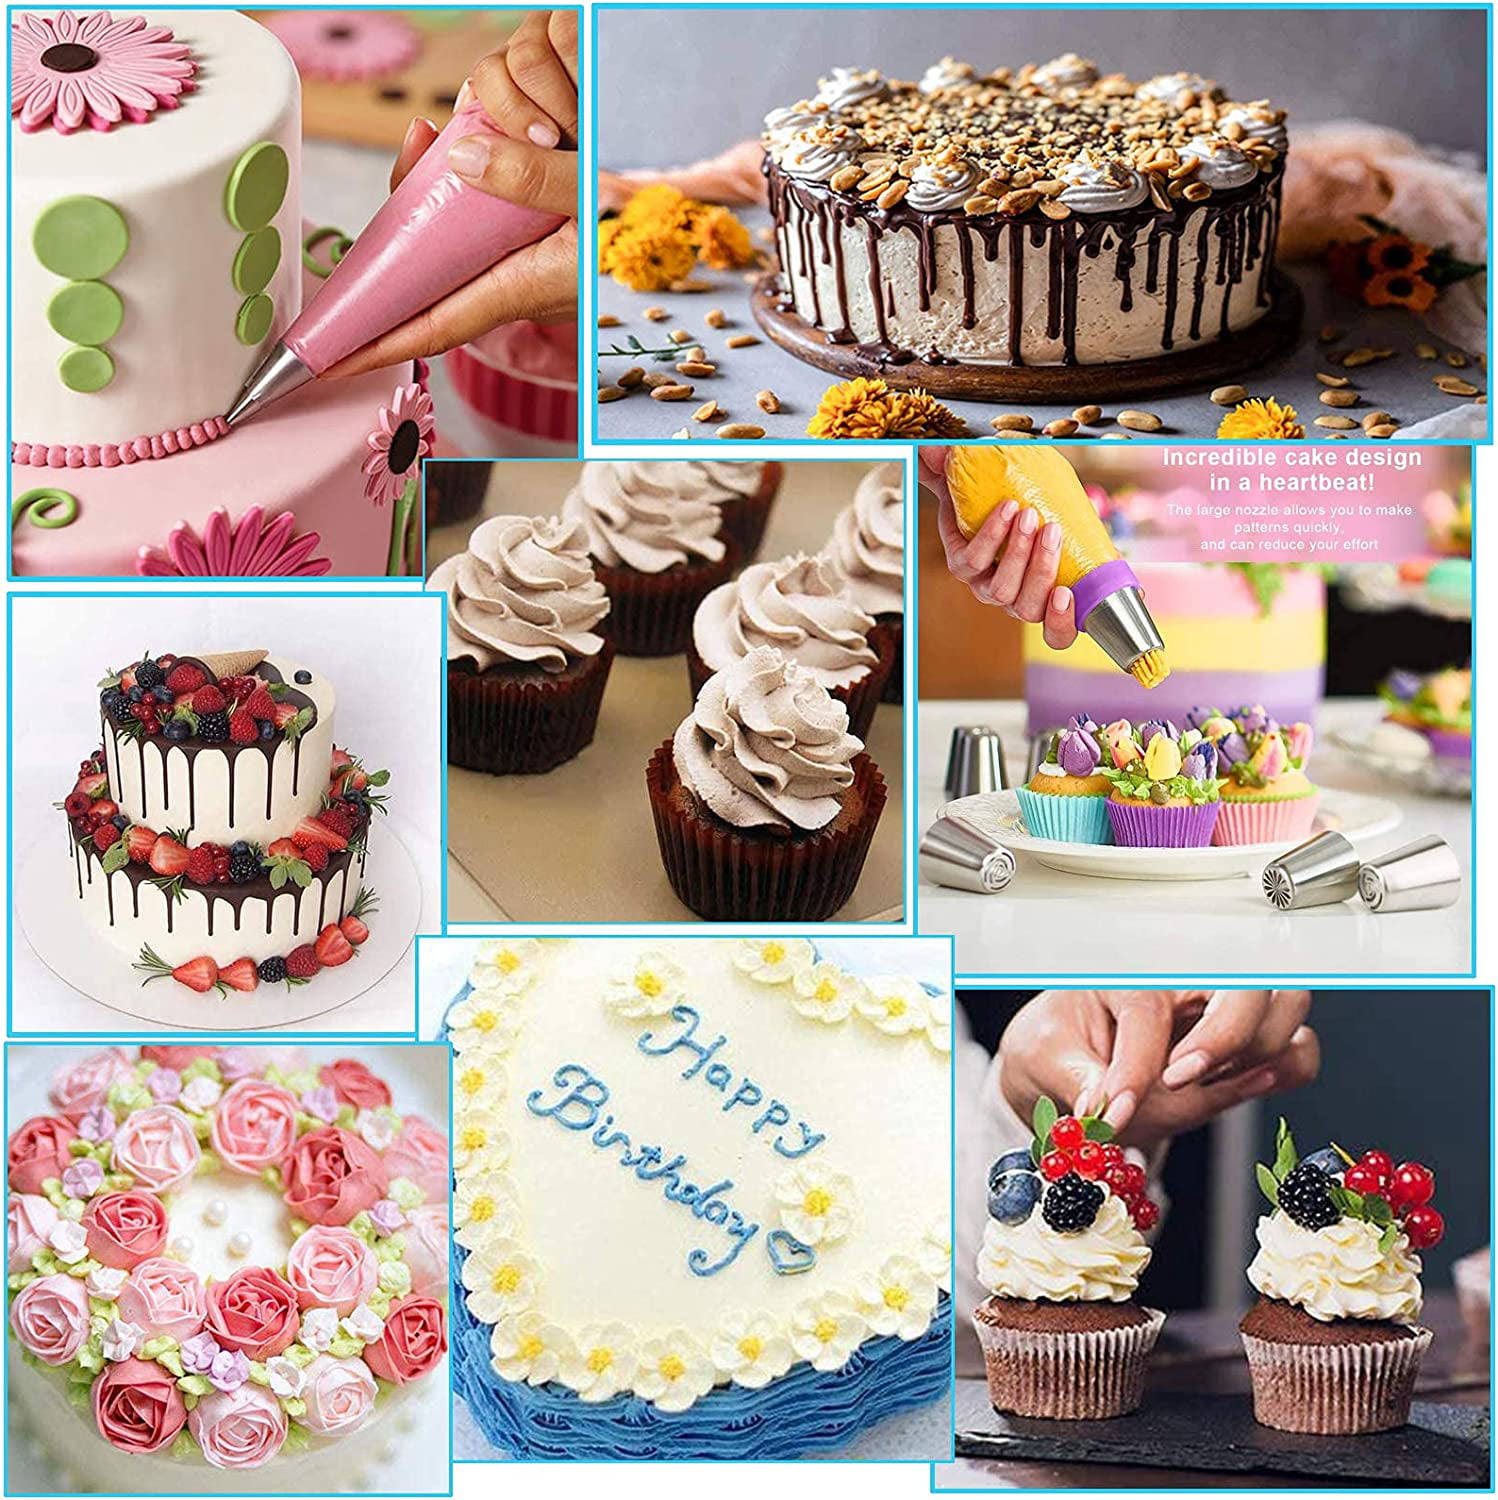 set of 137pcs Baking Supplies Cake Decorating Tools_Bestsell_Wina  Industrial Co., Ltd.